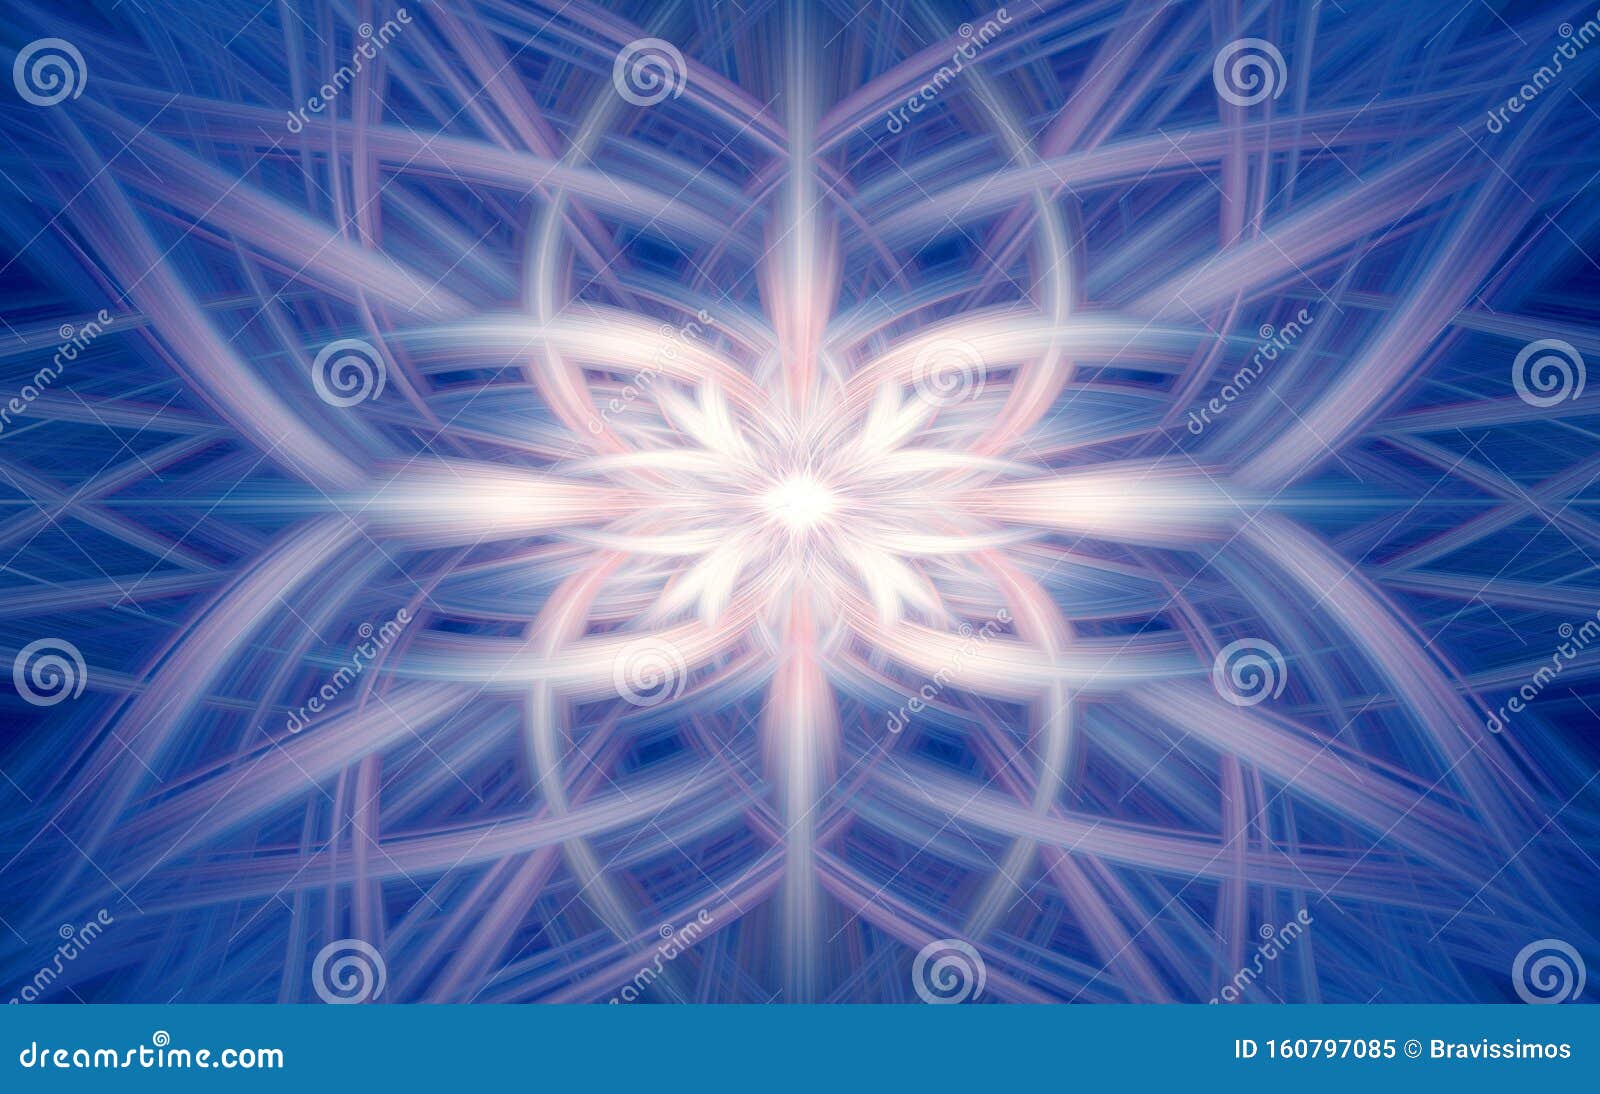 art  blue background pattern. symmetry blur